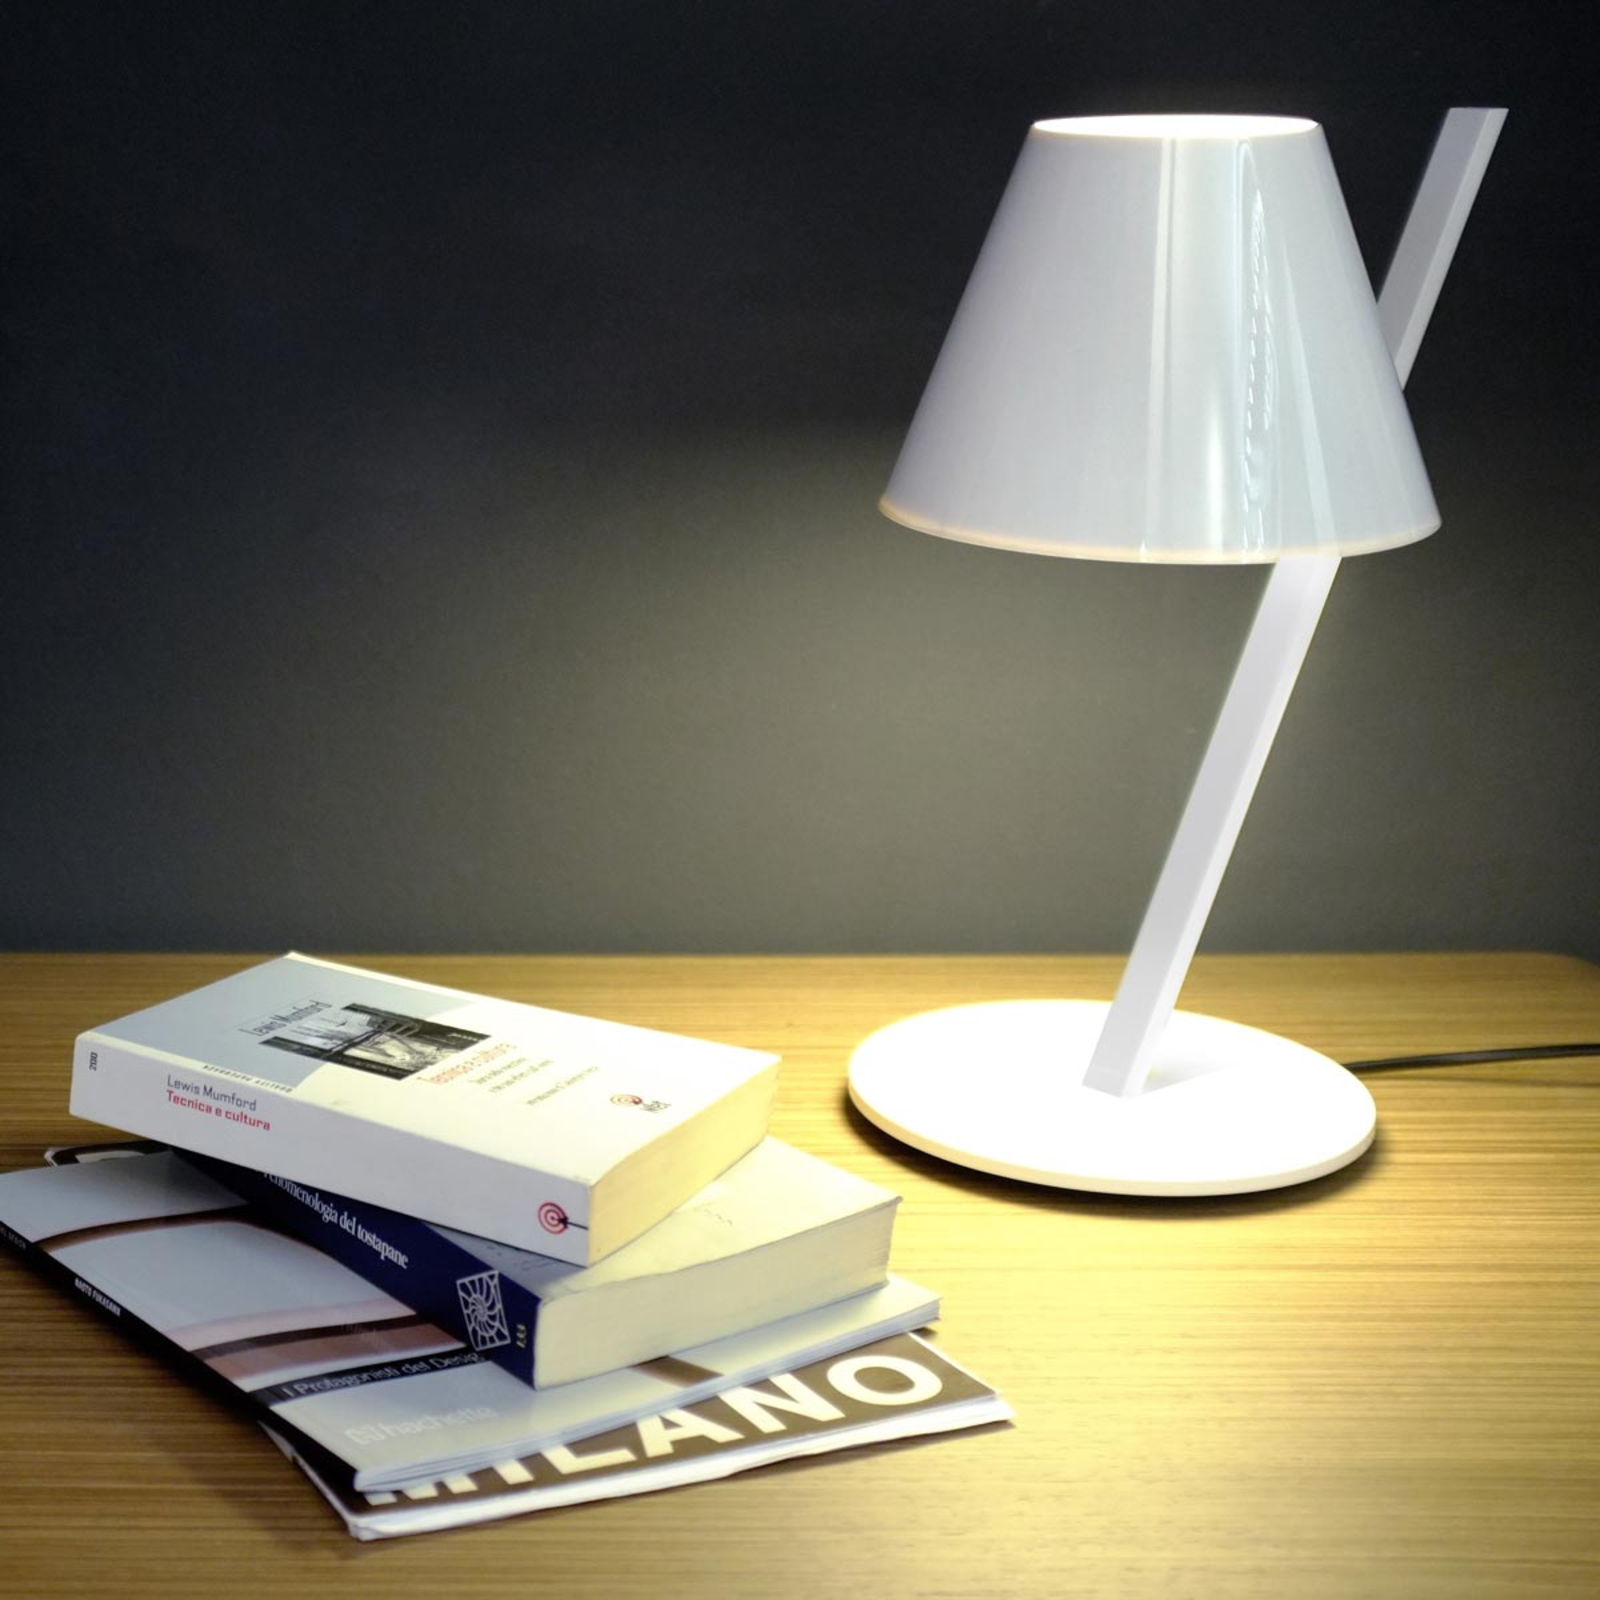 Witte design tafellamp La Petite